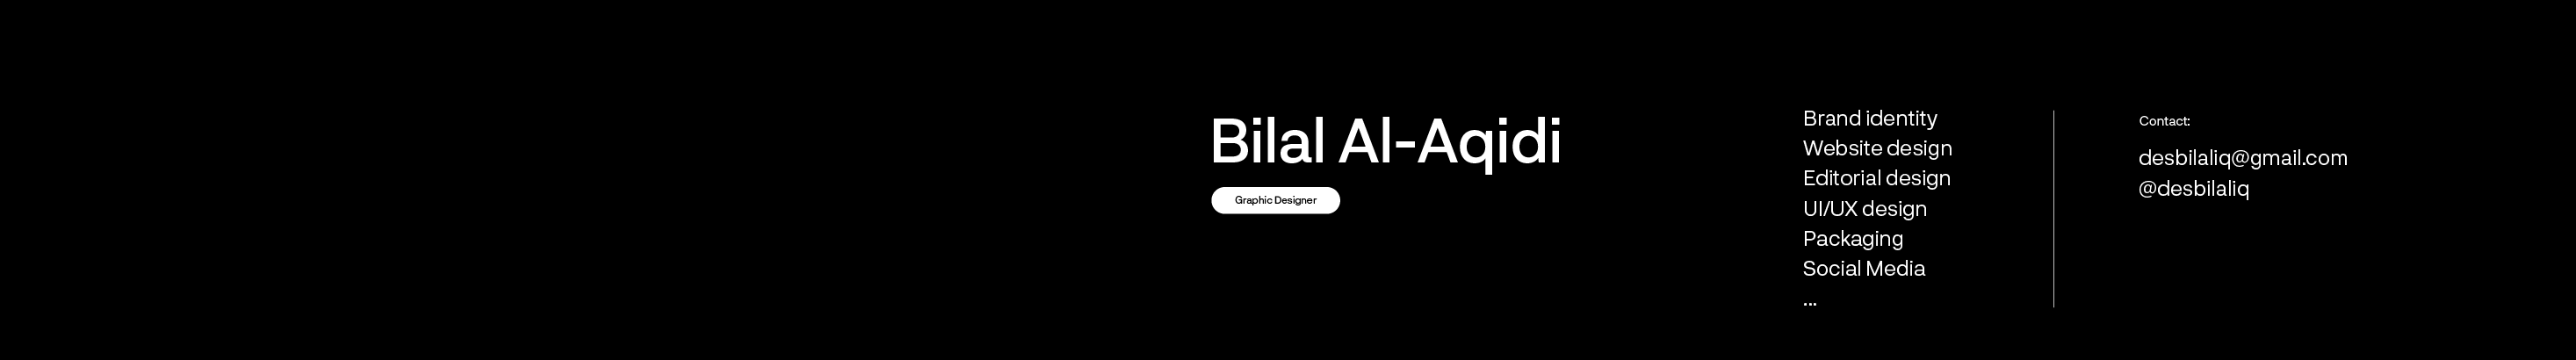 Bilal Al-Aqidi's profile banner